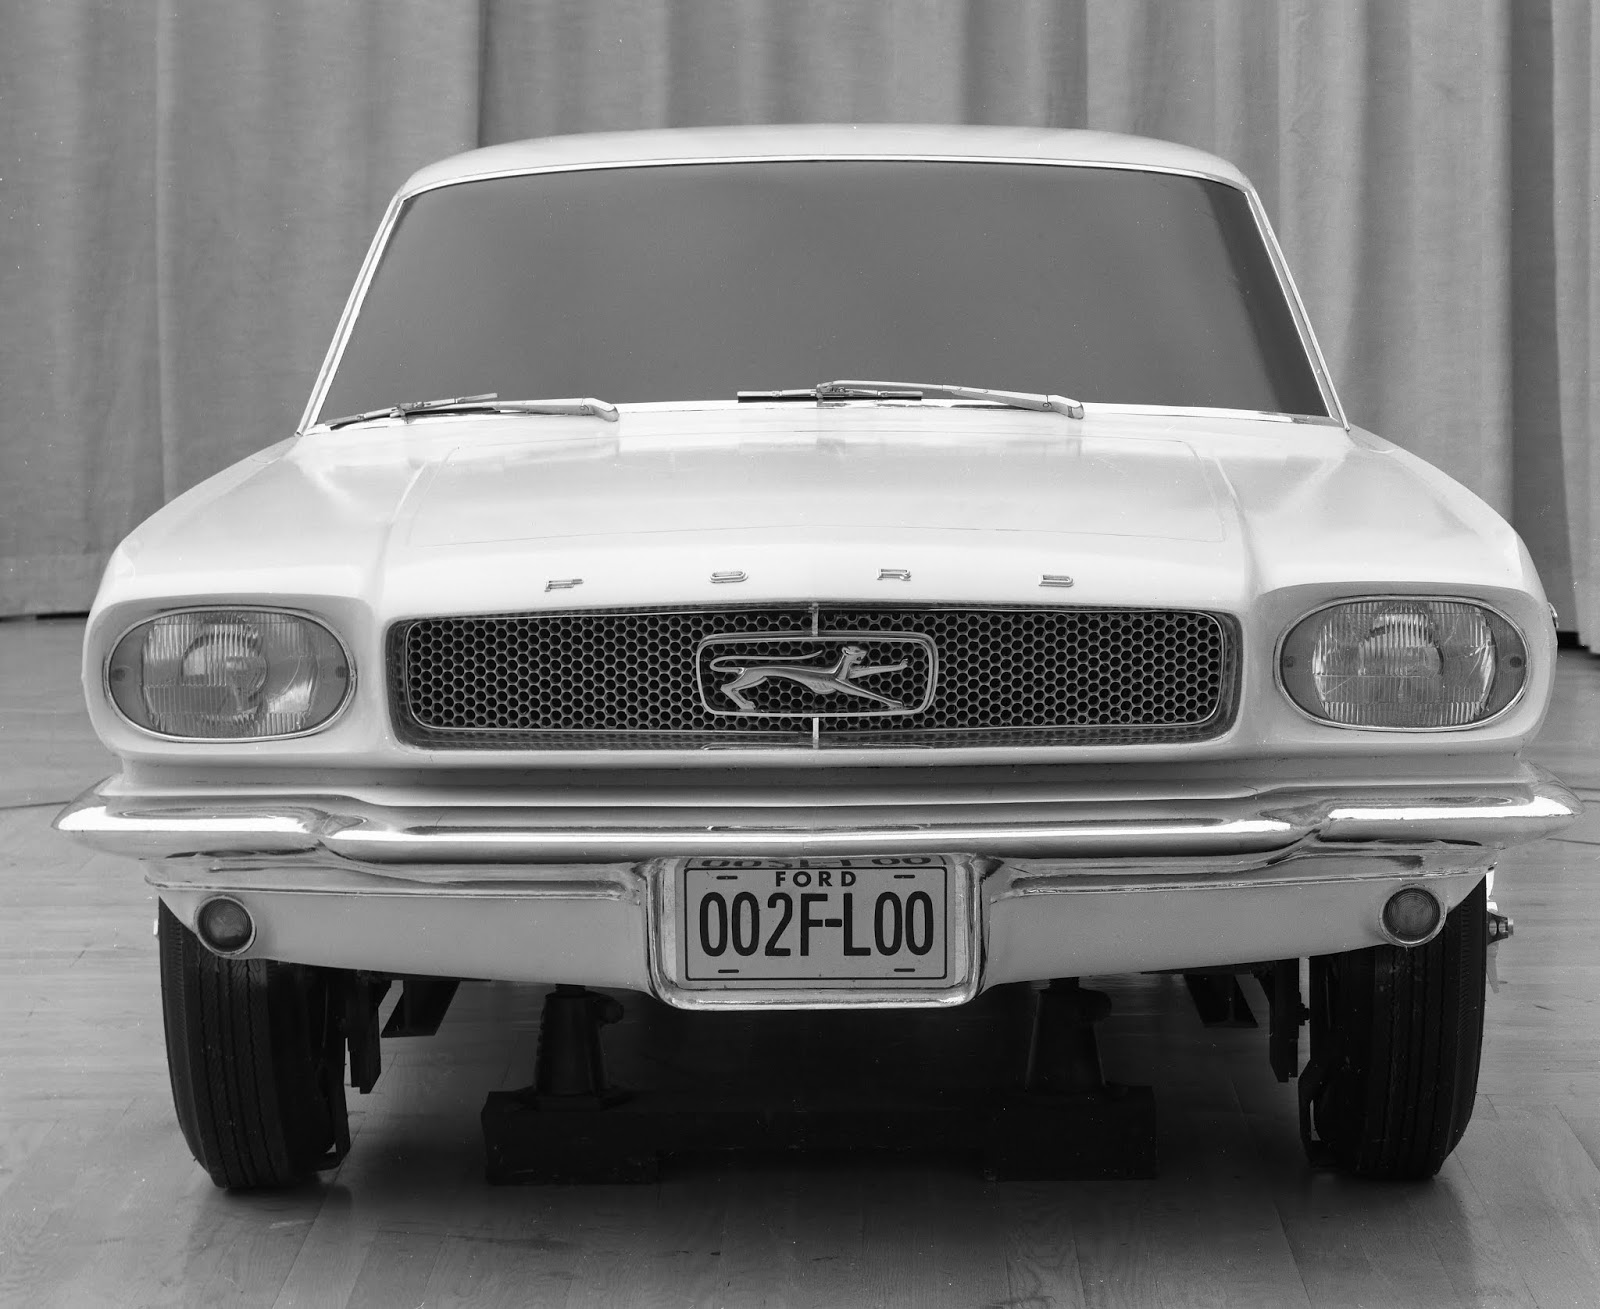 Q6 Cougar Ford Mustang Πώς γιορτάζει η Mustang τα 55 της χρόνια;